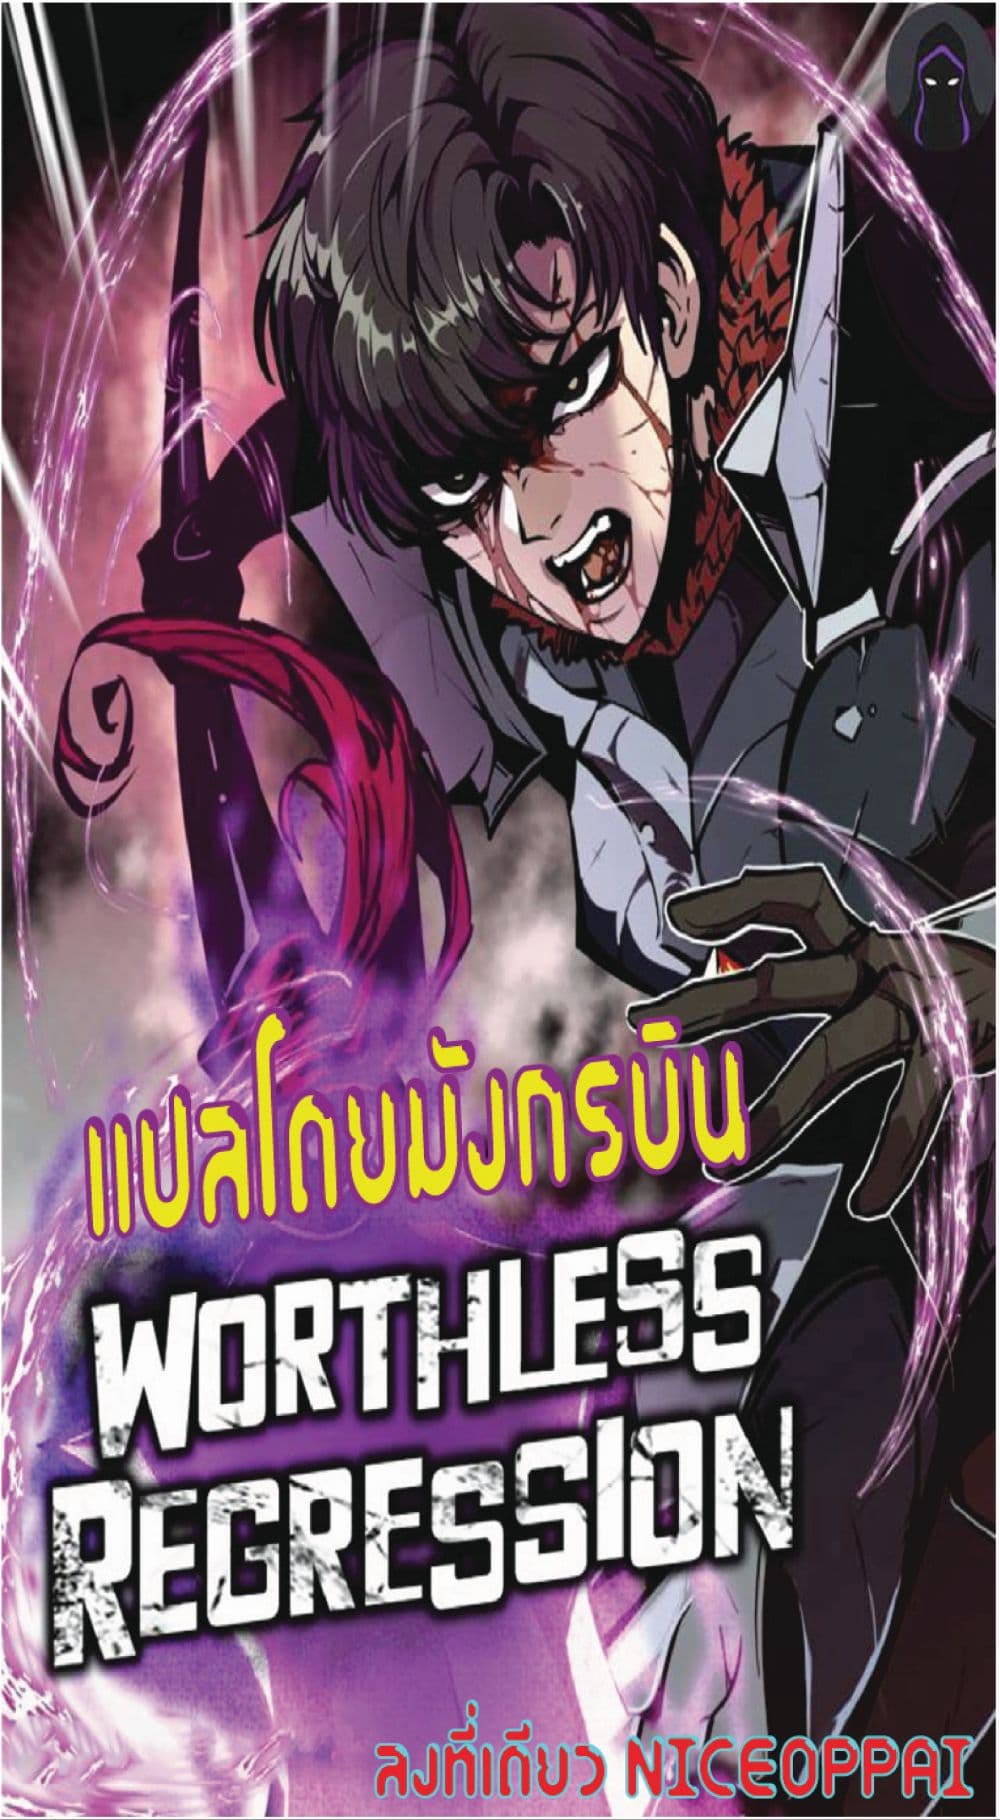 Worthless Regression17 01